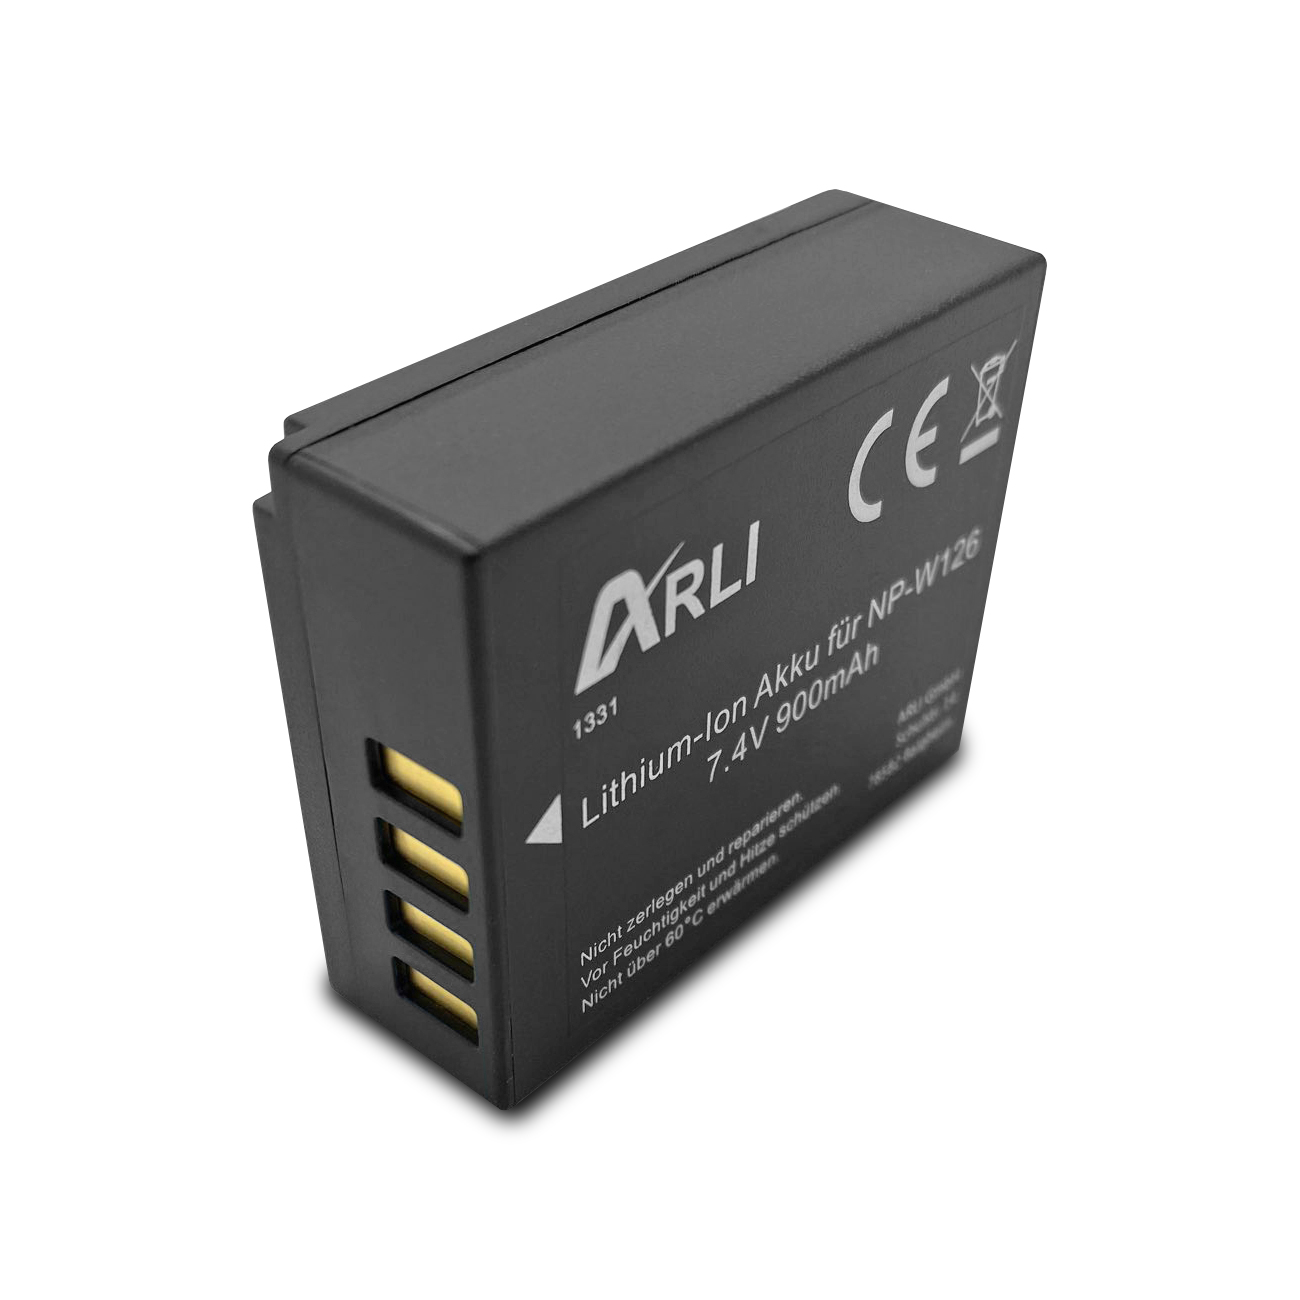 ARLI 2x Akku für LP-E12 Volt, 600 Li-Ion Canon Ladegerät 2 Stück Set, + 7.4 mAh Akku